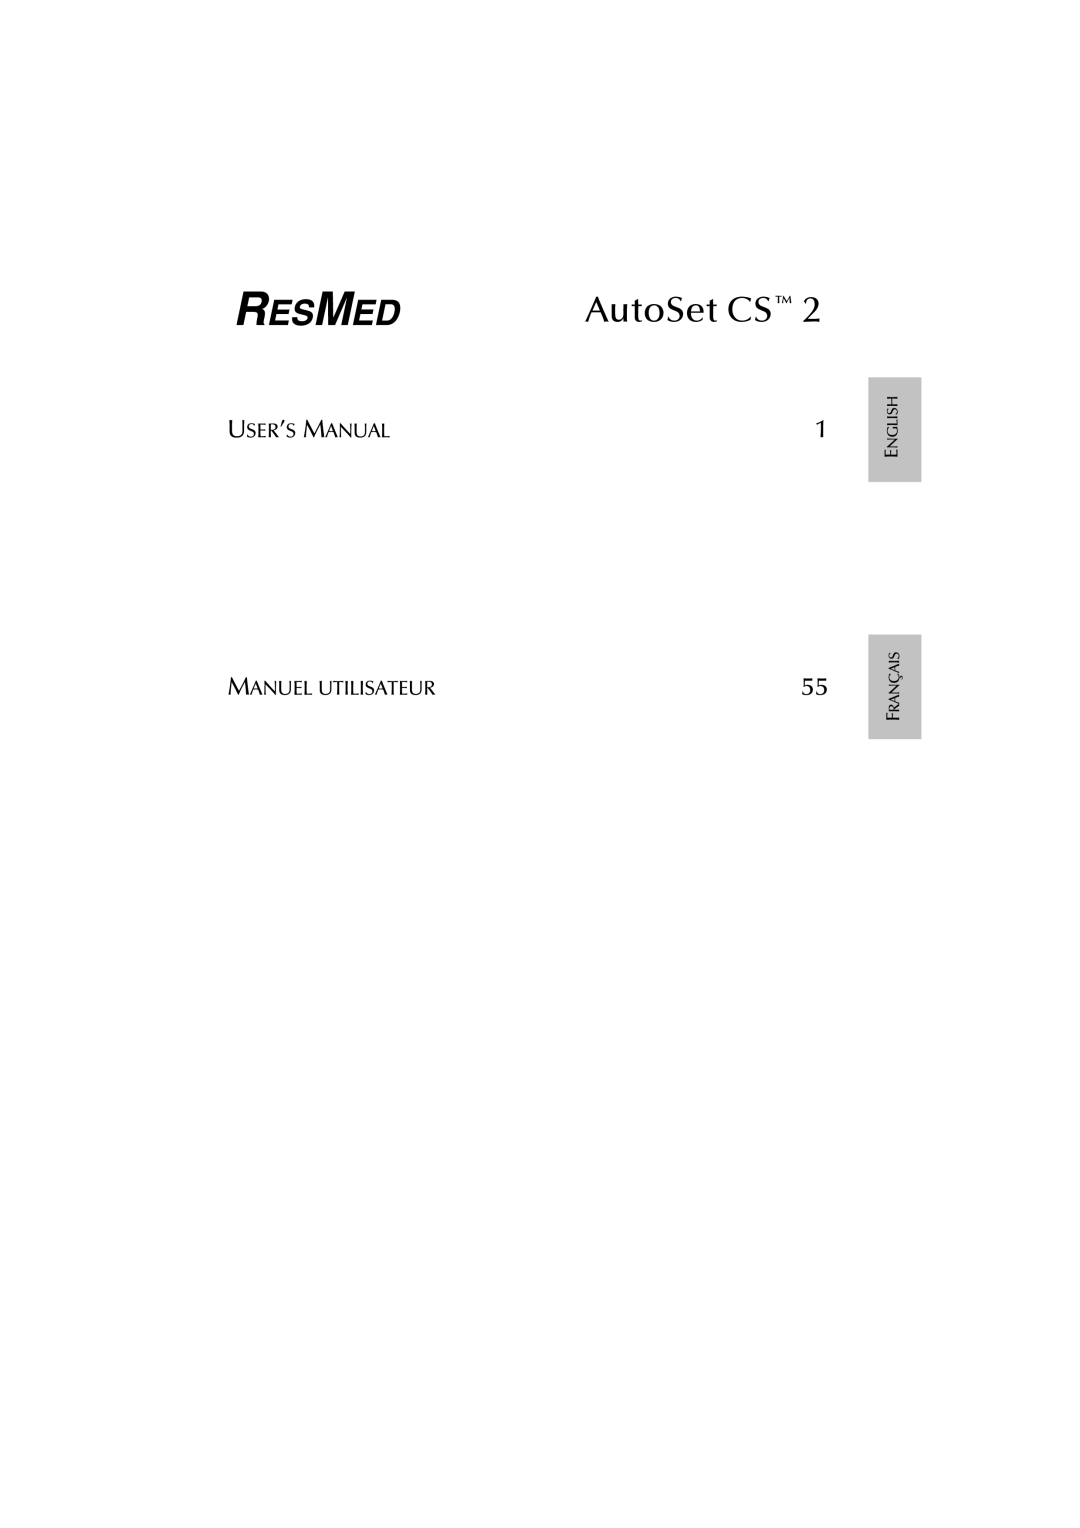 ResMed AutoSet CS 2 user manual User’S Manual, Manuel Utilisateur 